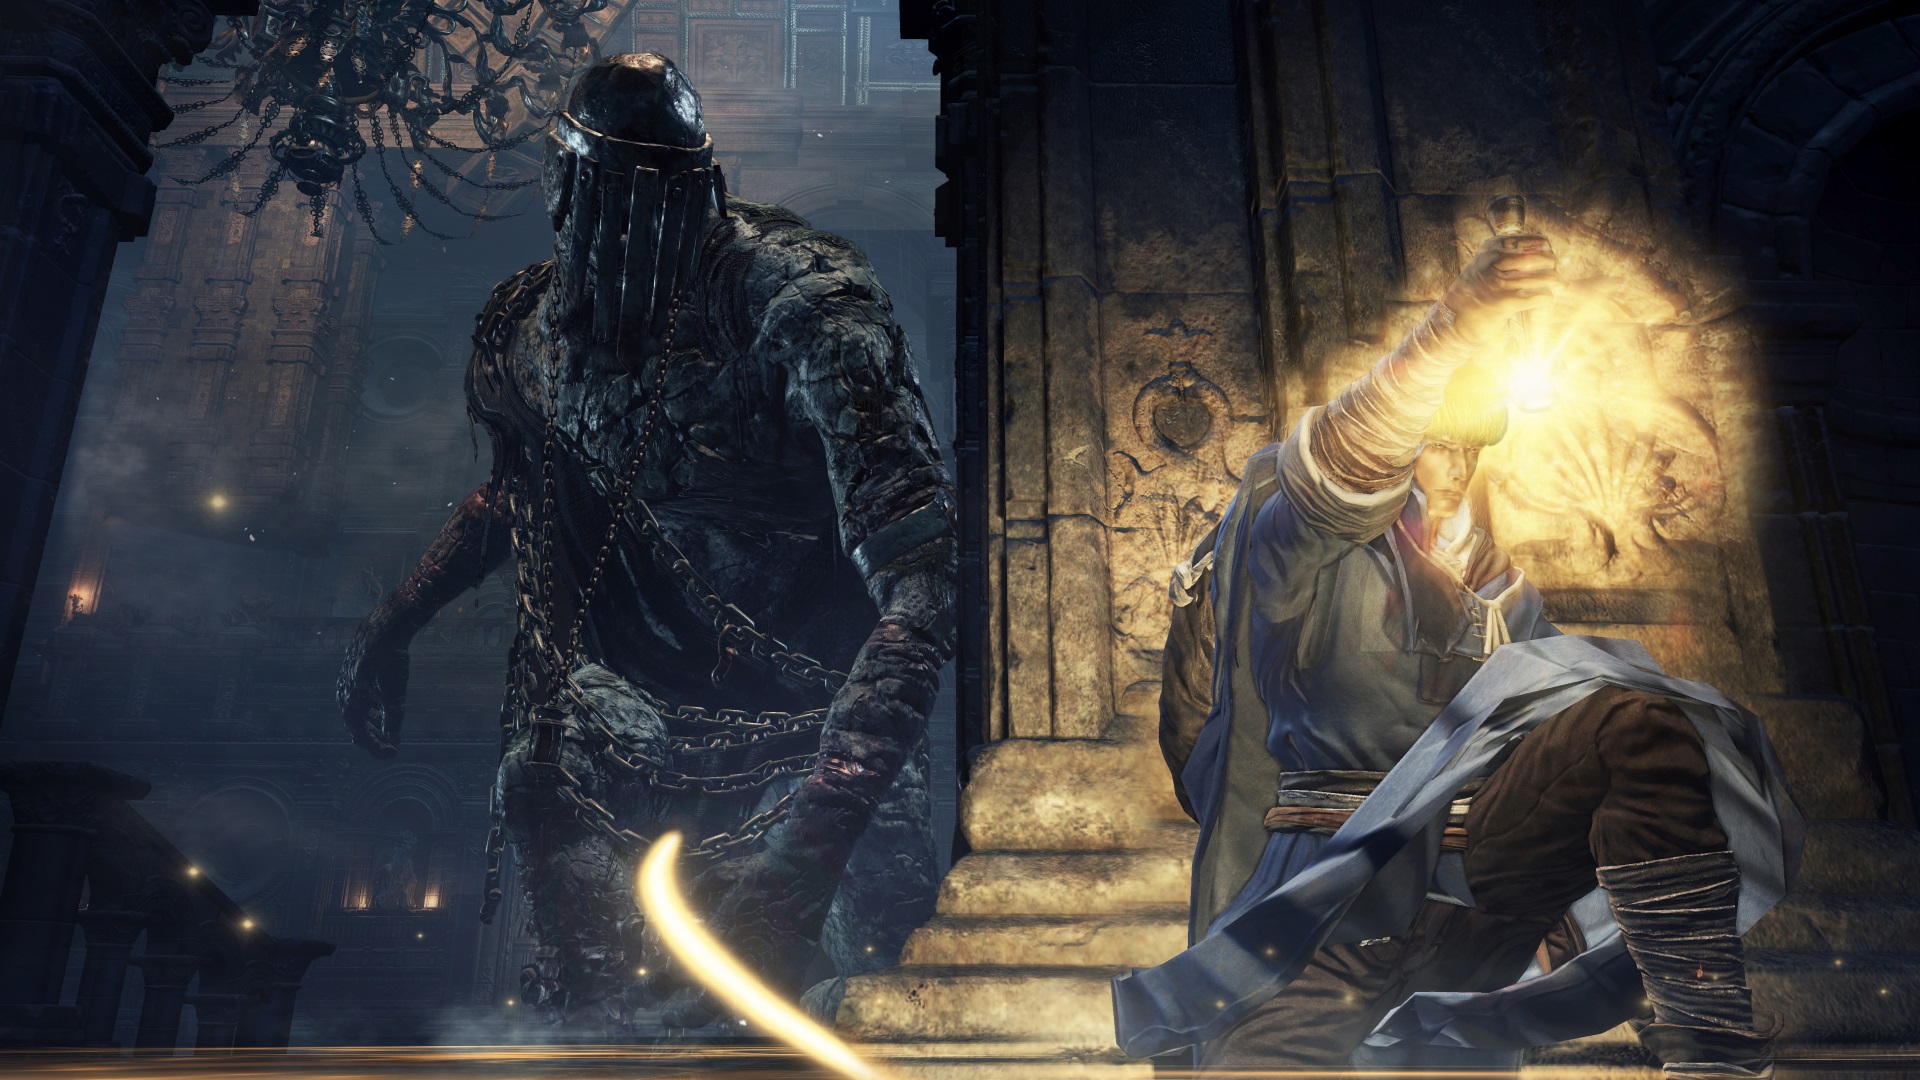 Dark Souls III - Ashes of Ariandel DLC Announcement Trailer